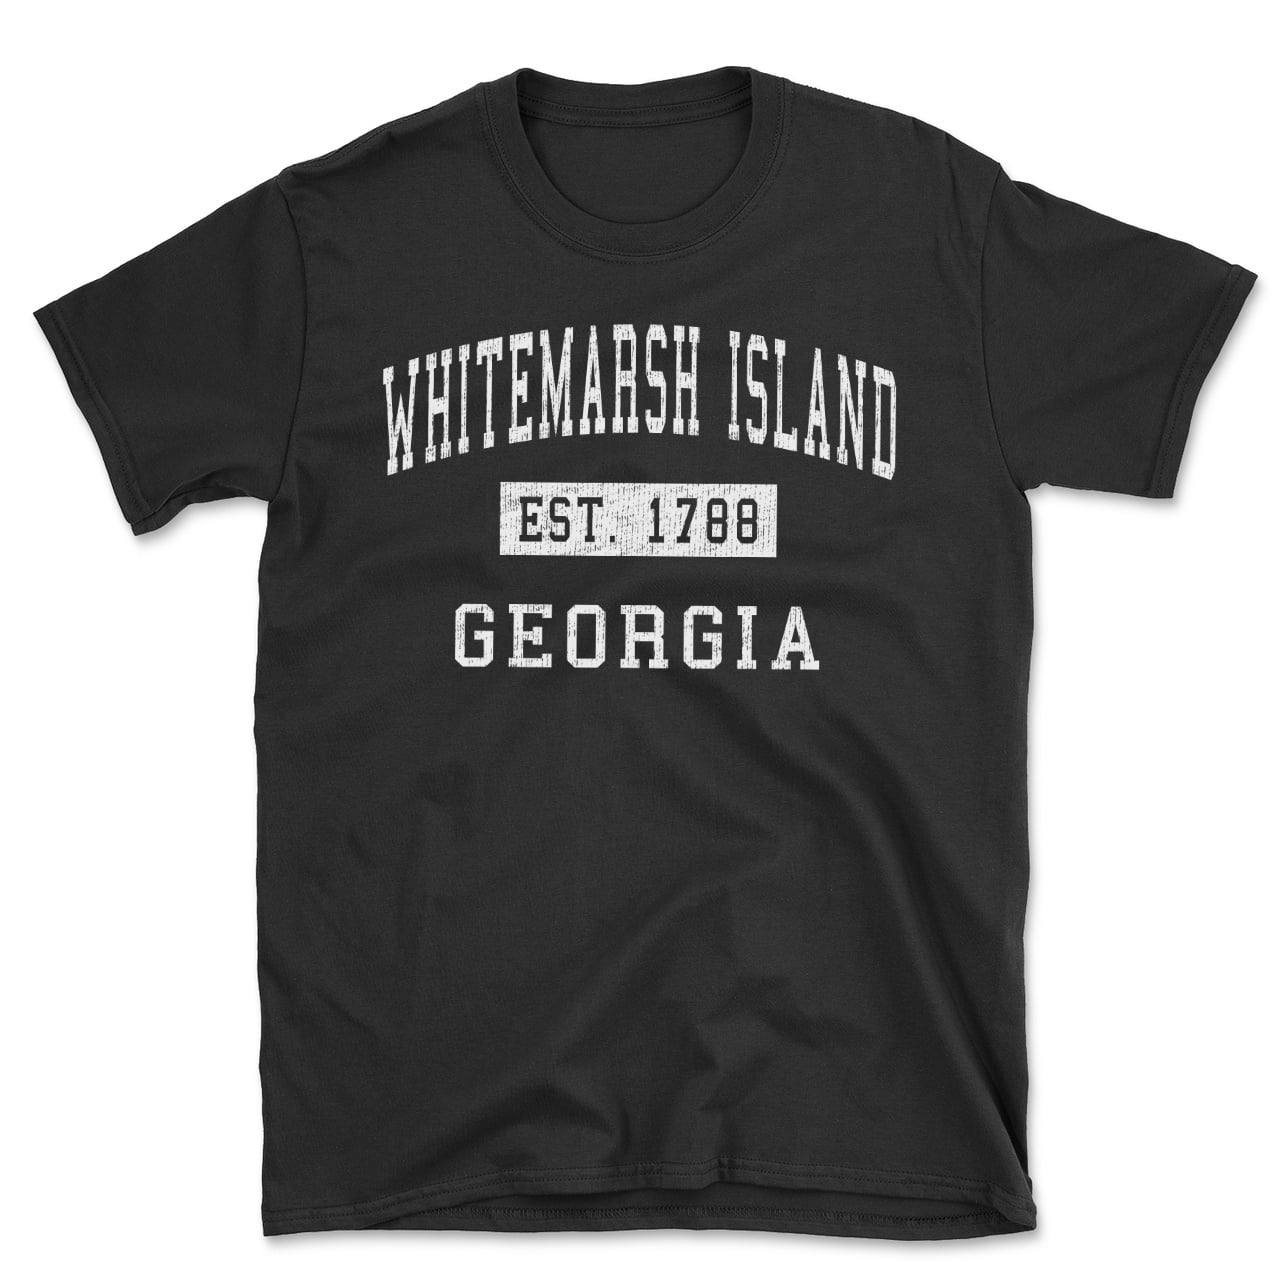 T-Shirt Georgia WMS Details about   There show original title 